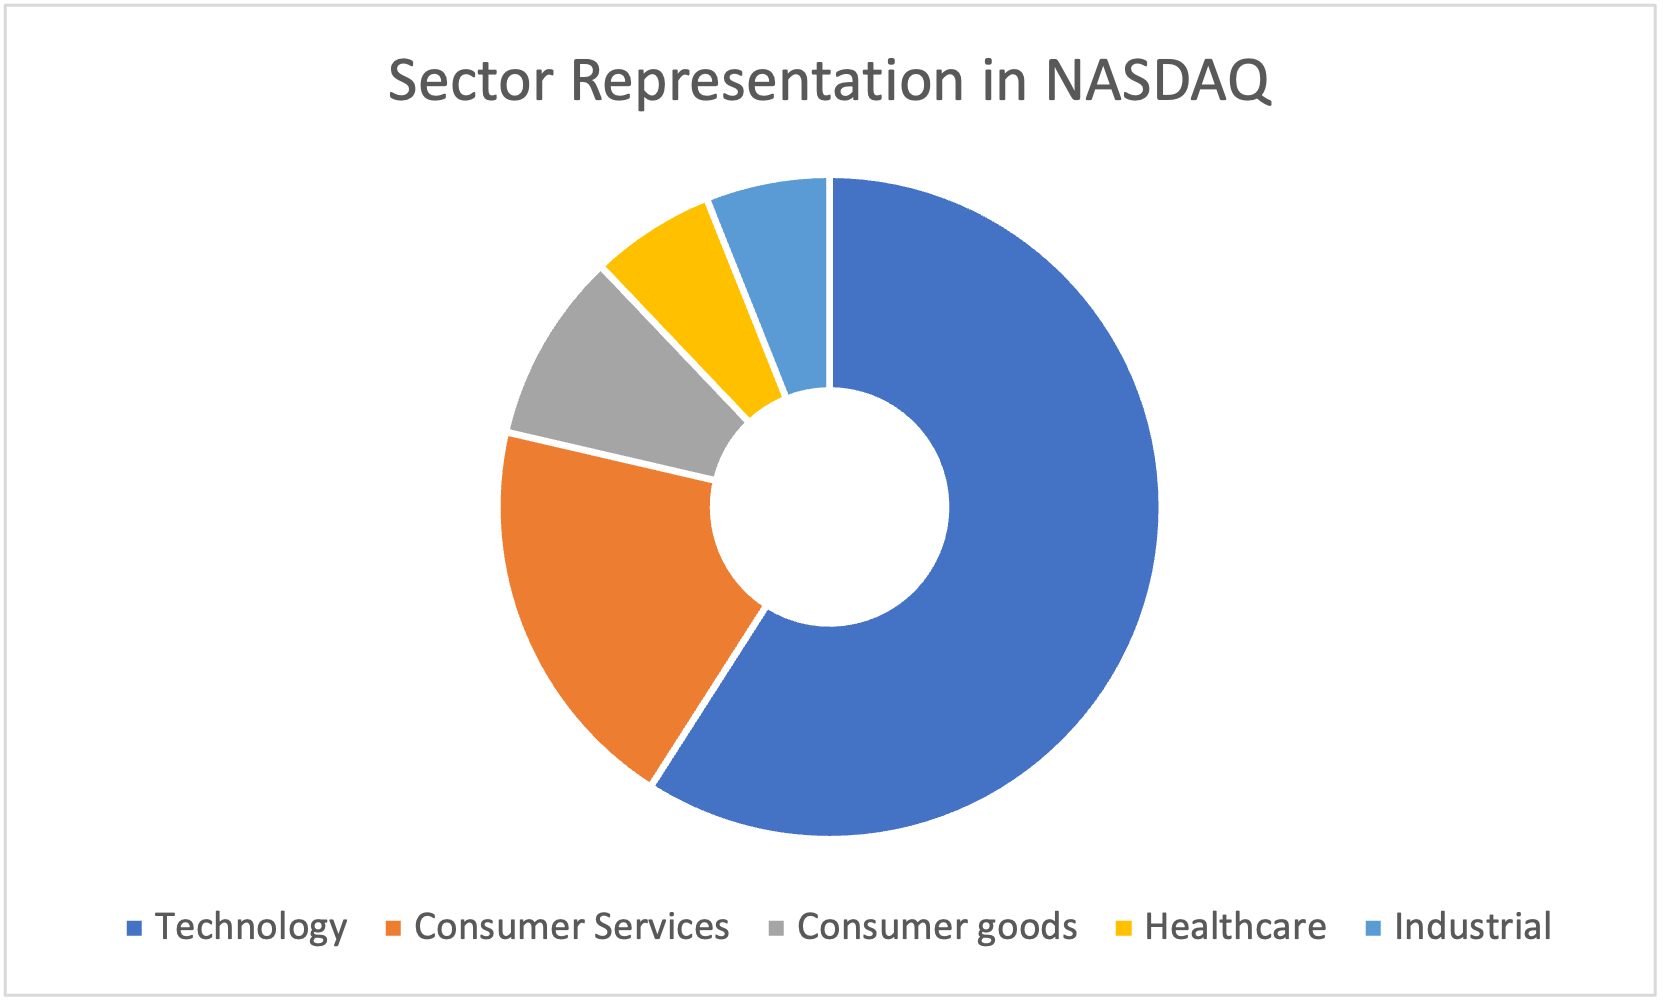 Sector representation in the NASDAQ index